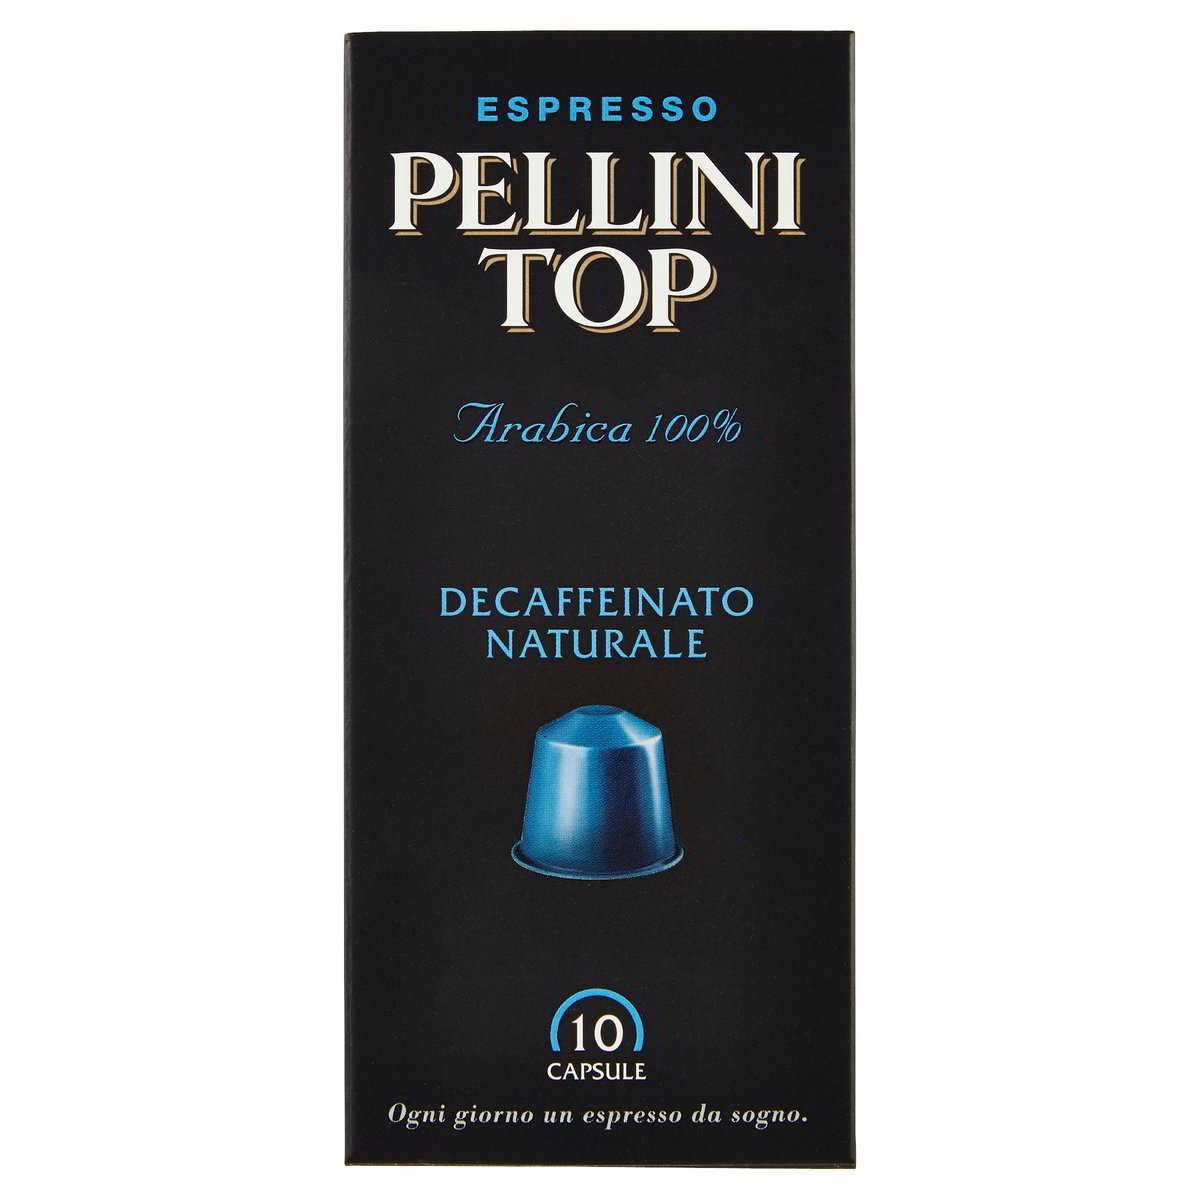 Pellini Top Capsule caffè Decaffeinato Naturale